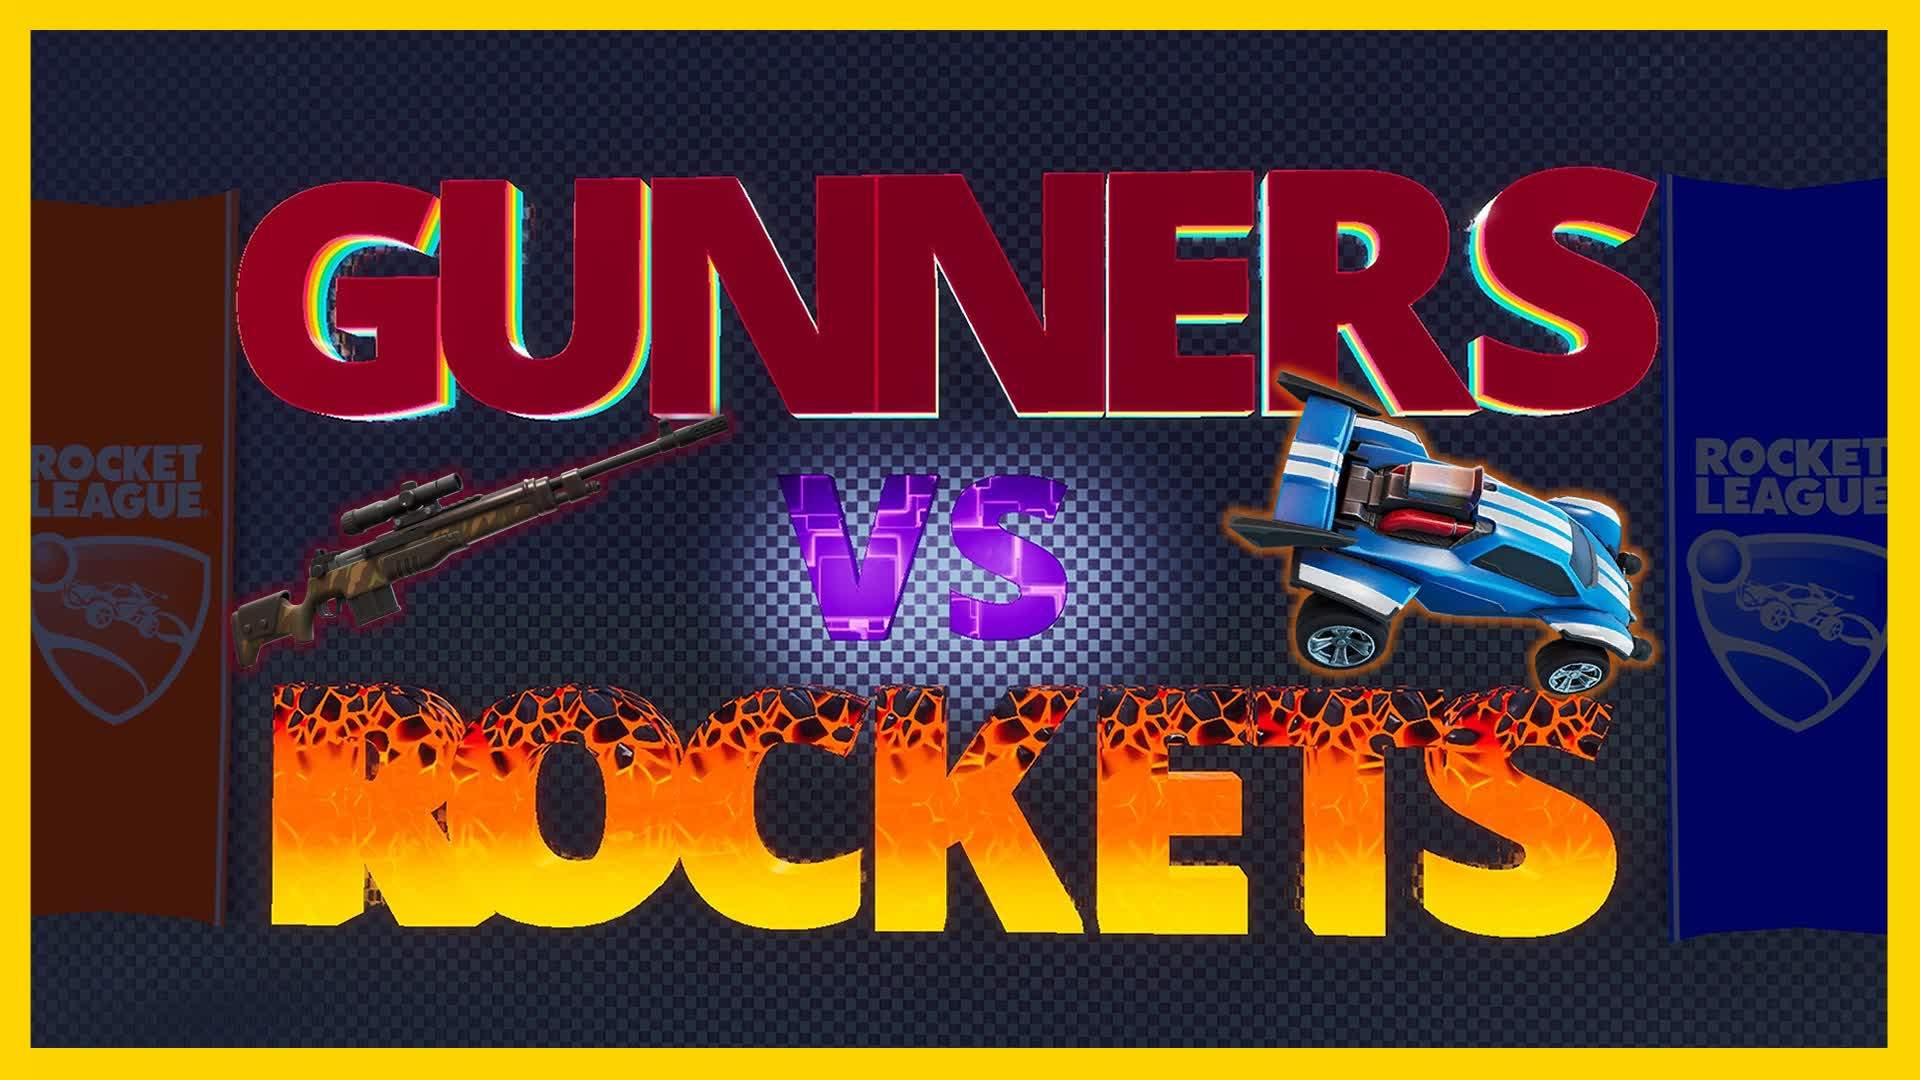 GUNNERS VS ROCKETS